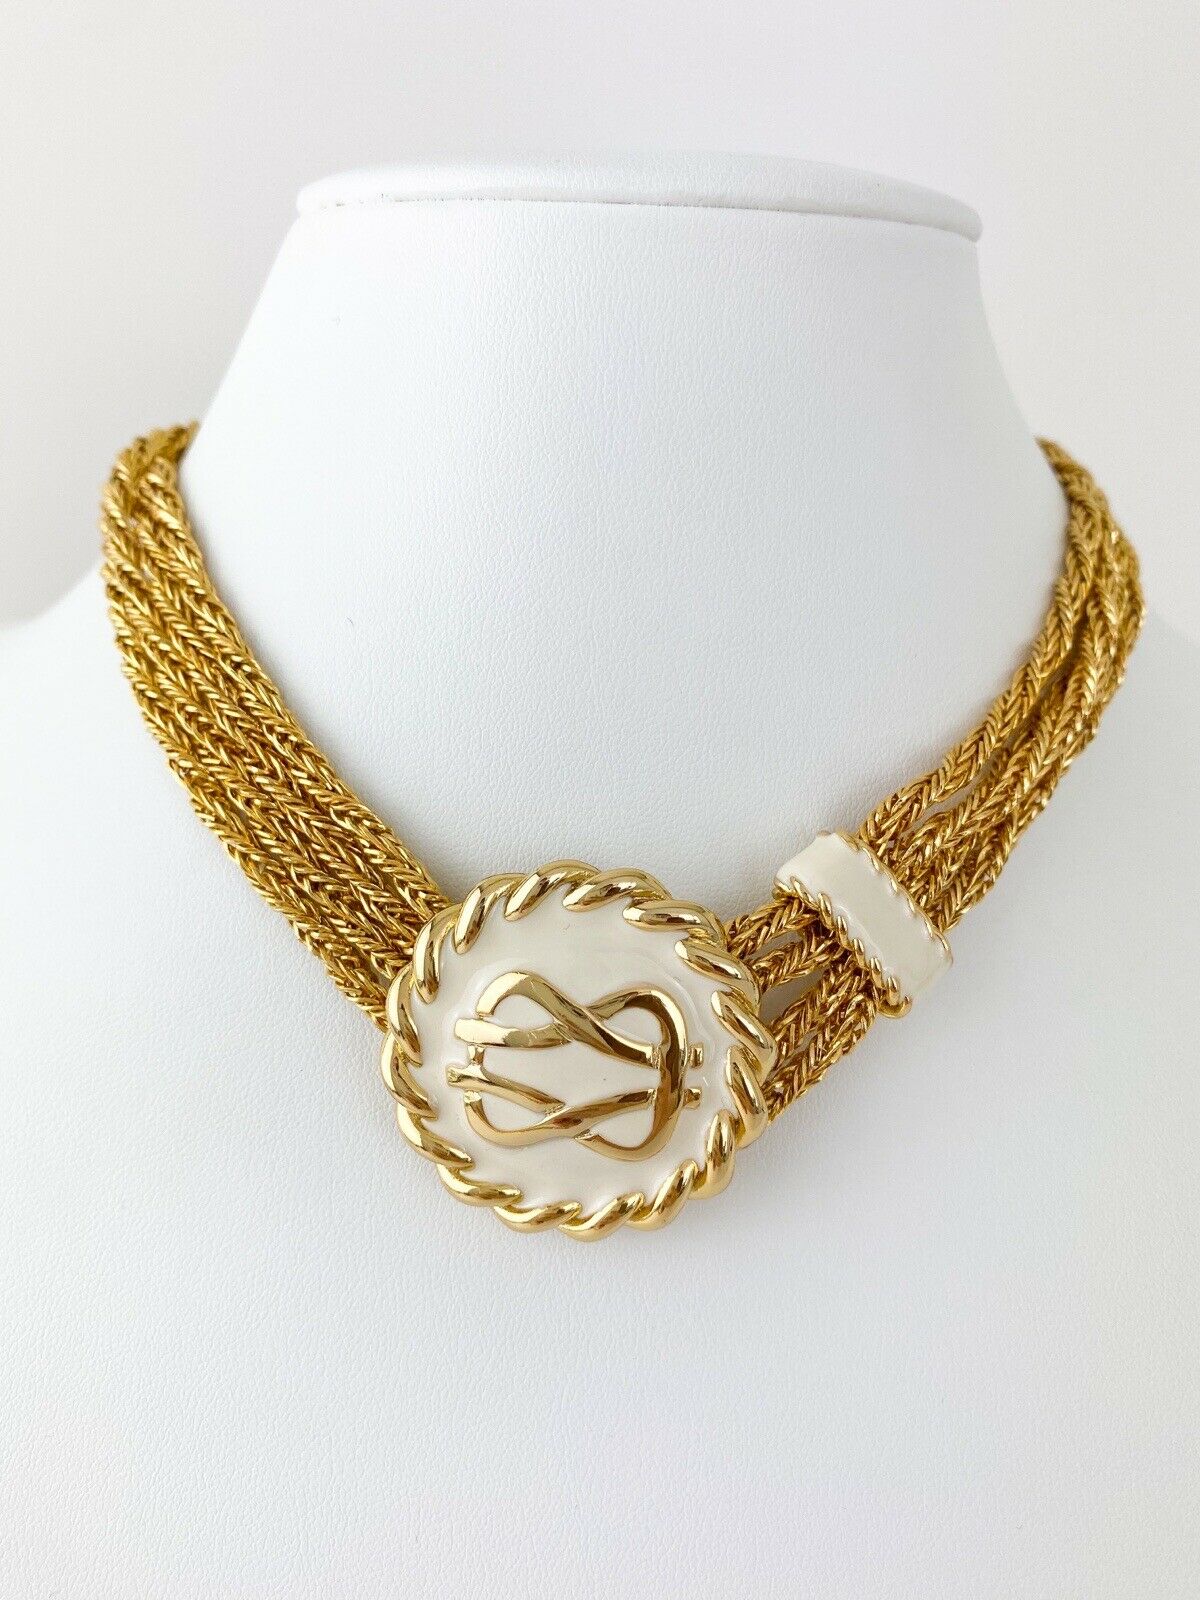 HR Helena Rubinstein Paris Gold Tone Multi Strands Choker Necklace Vintage